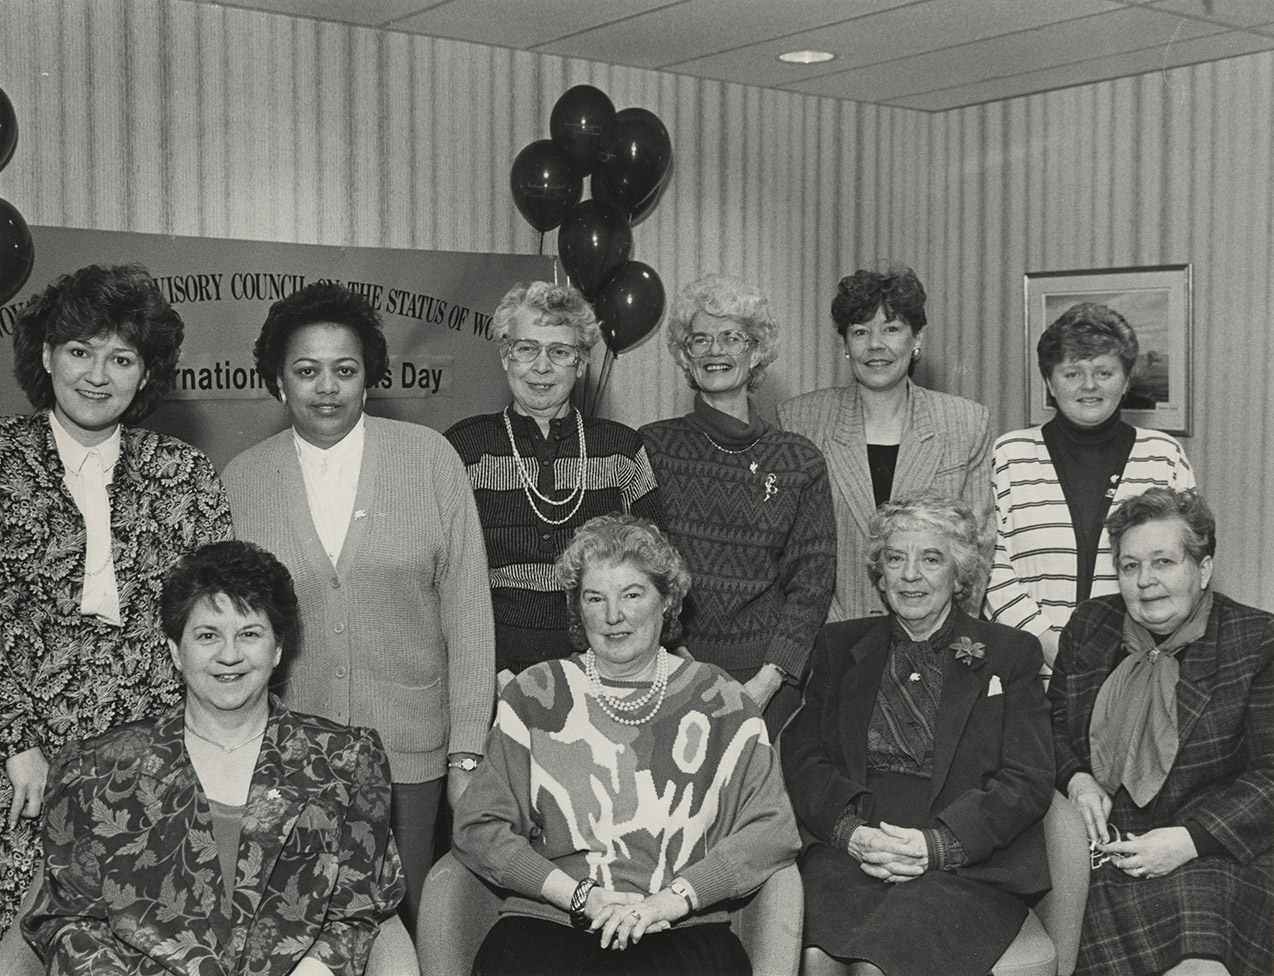 communityalbums - Nova Scotia Advisory Council on the Status of Women Council Members, March 1989